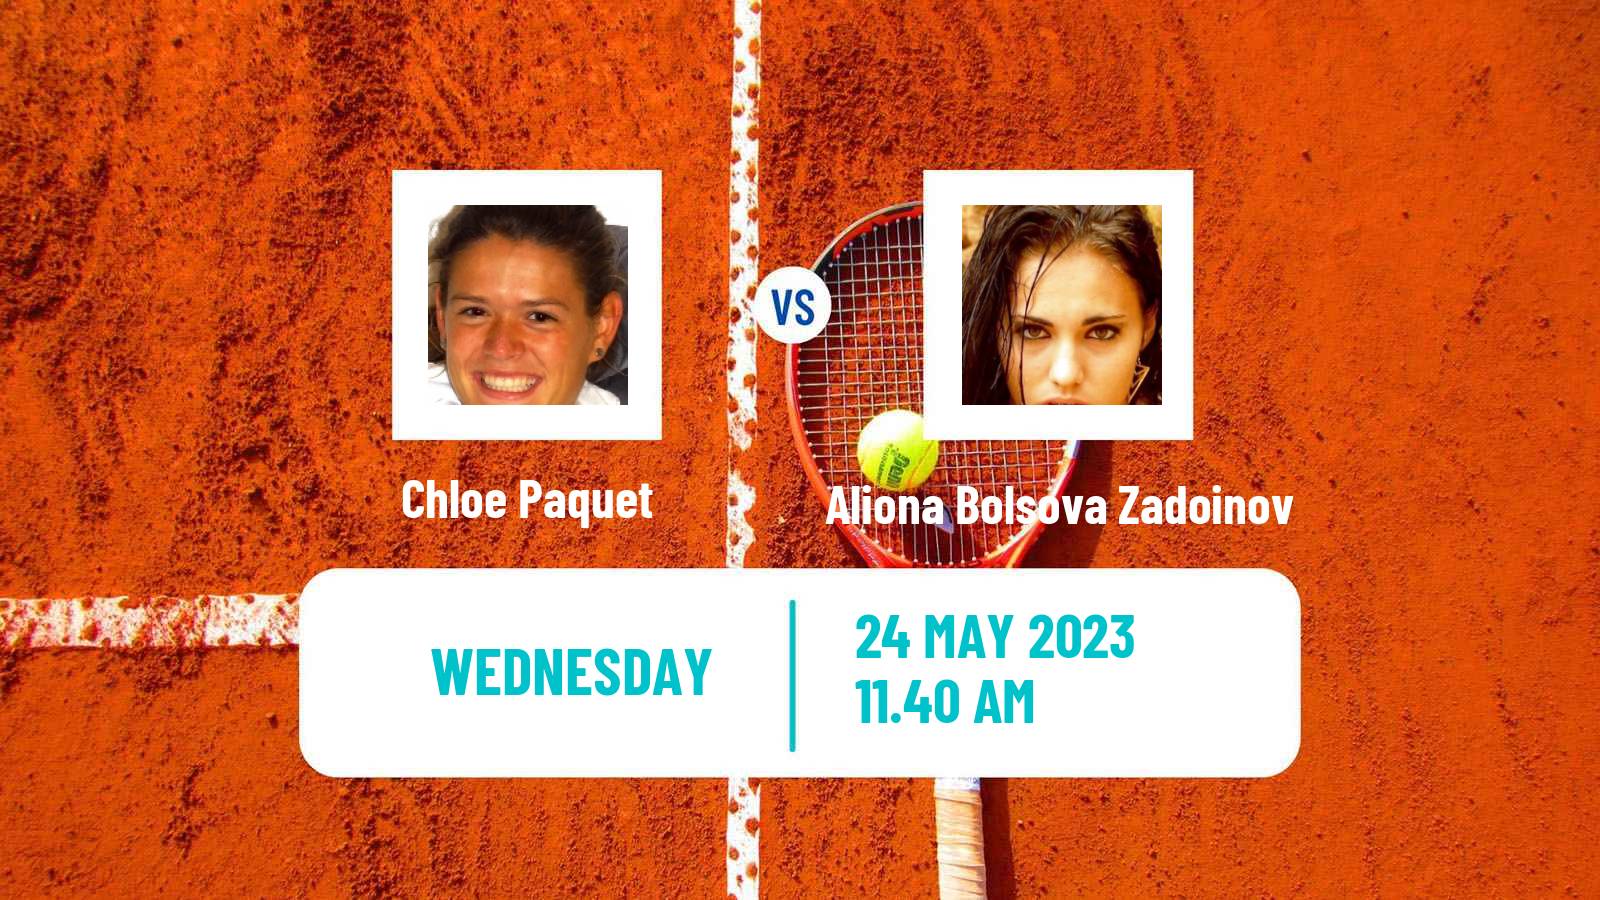 Tennis WTA Roland Garros Chloe Paquet - Aliona Bolsova Zadoinov